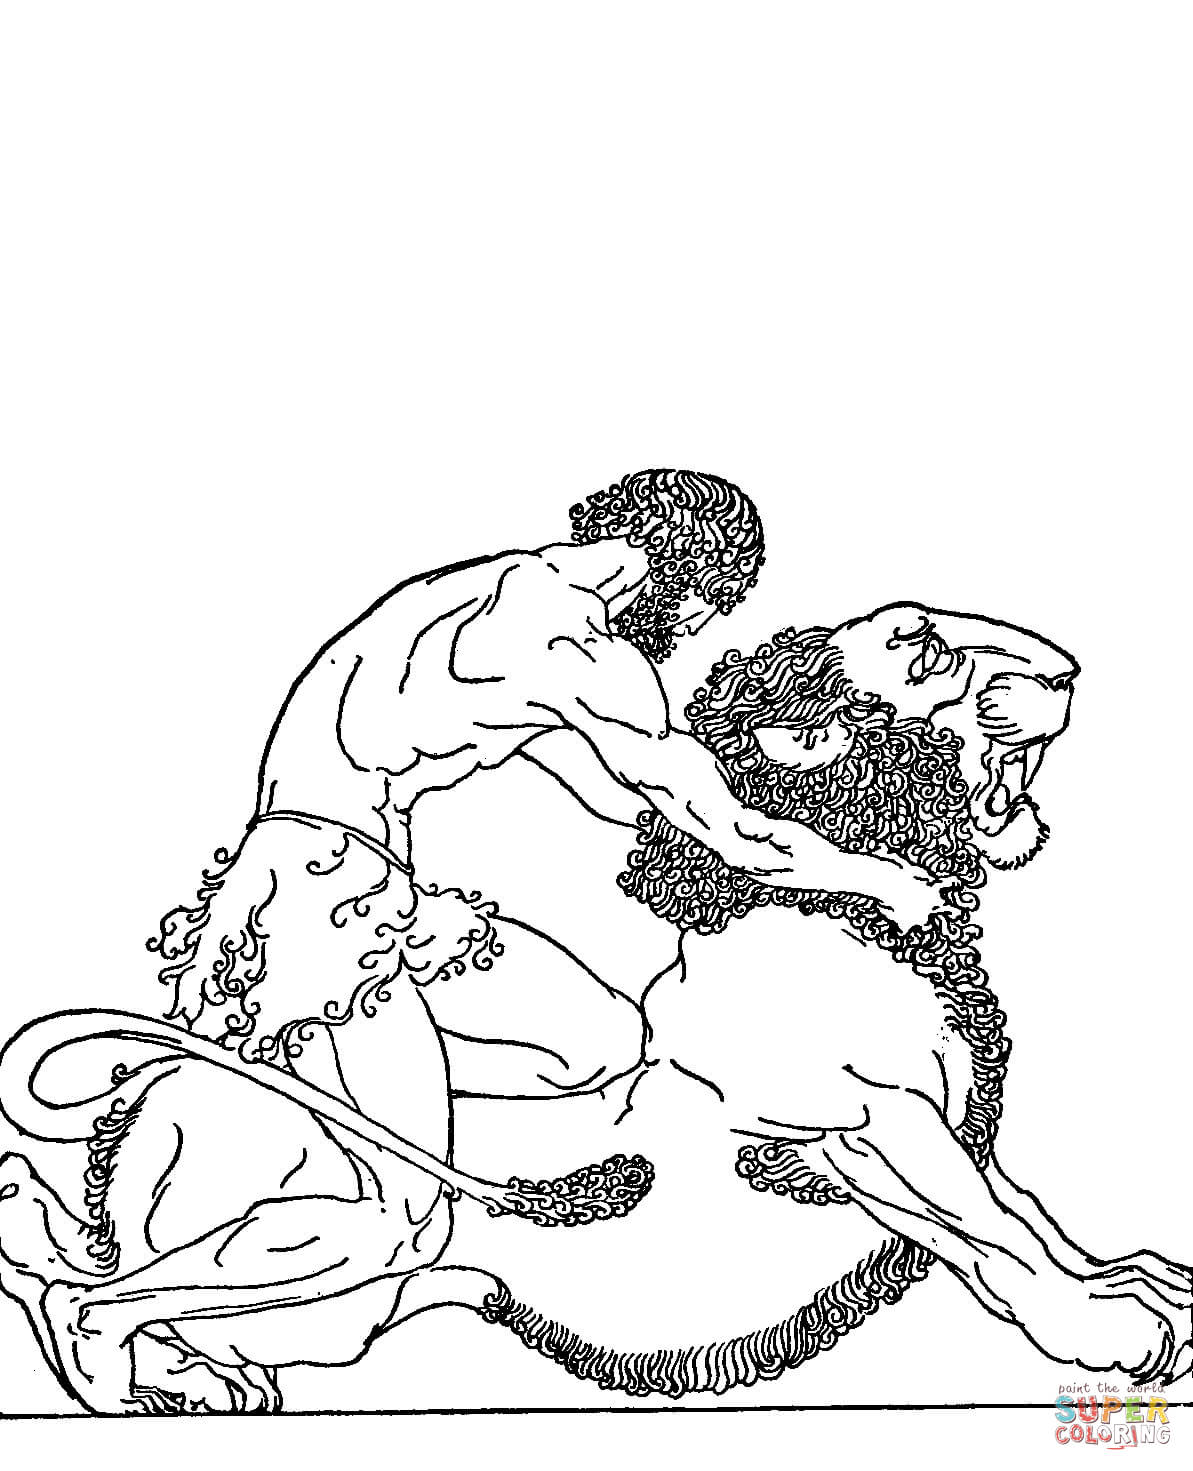 Heracles coloring #20, Download drawings